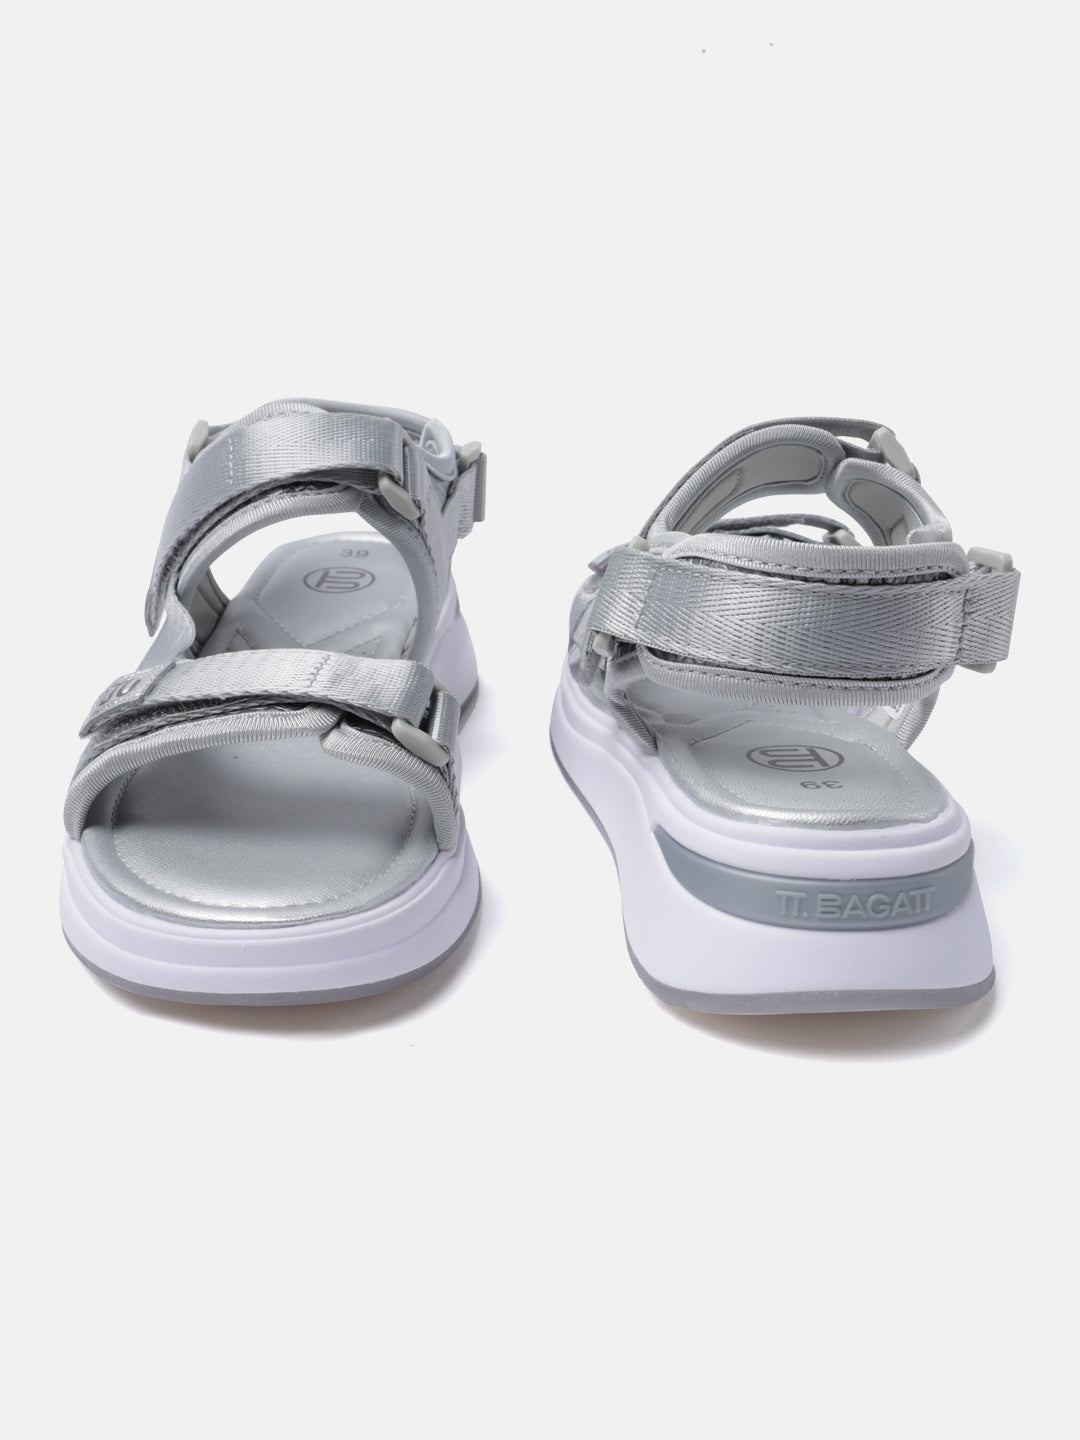 Nira Silver & Metallics Back Strap Sandals